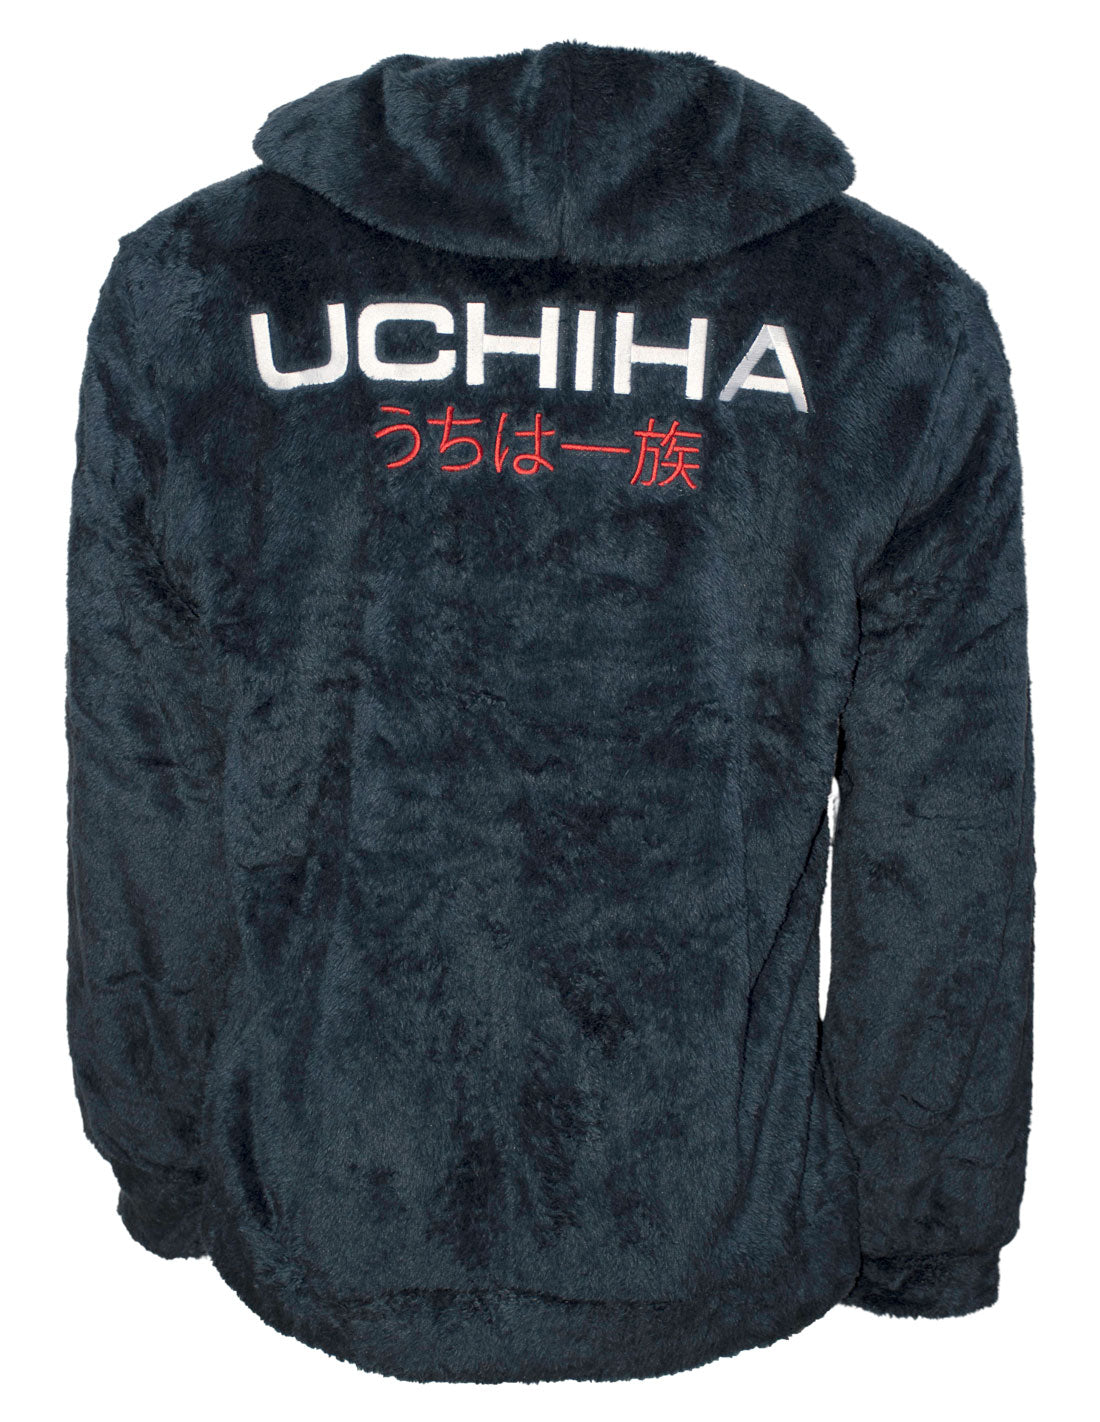 Naruto Plush Sweatshirt - Uchiha